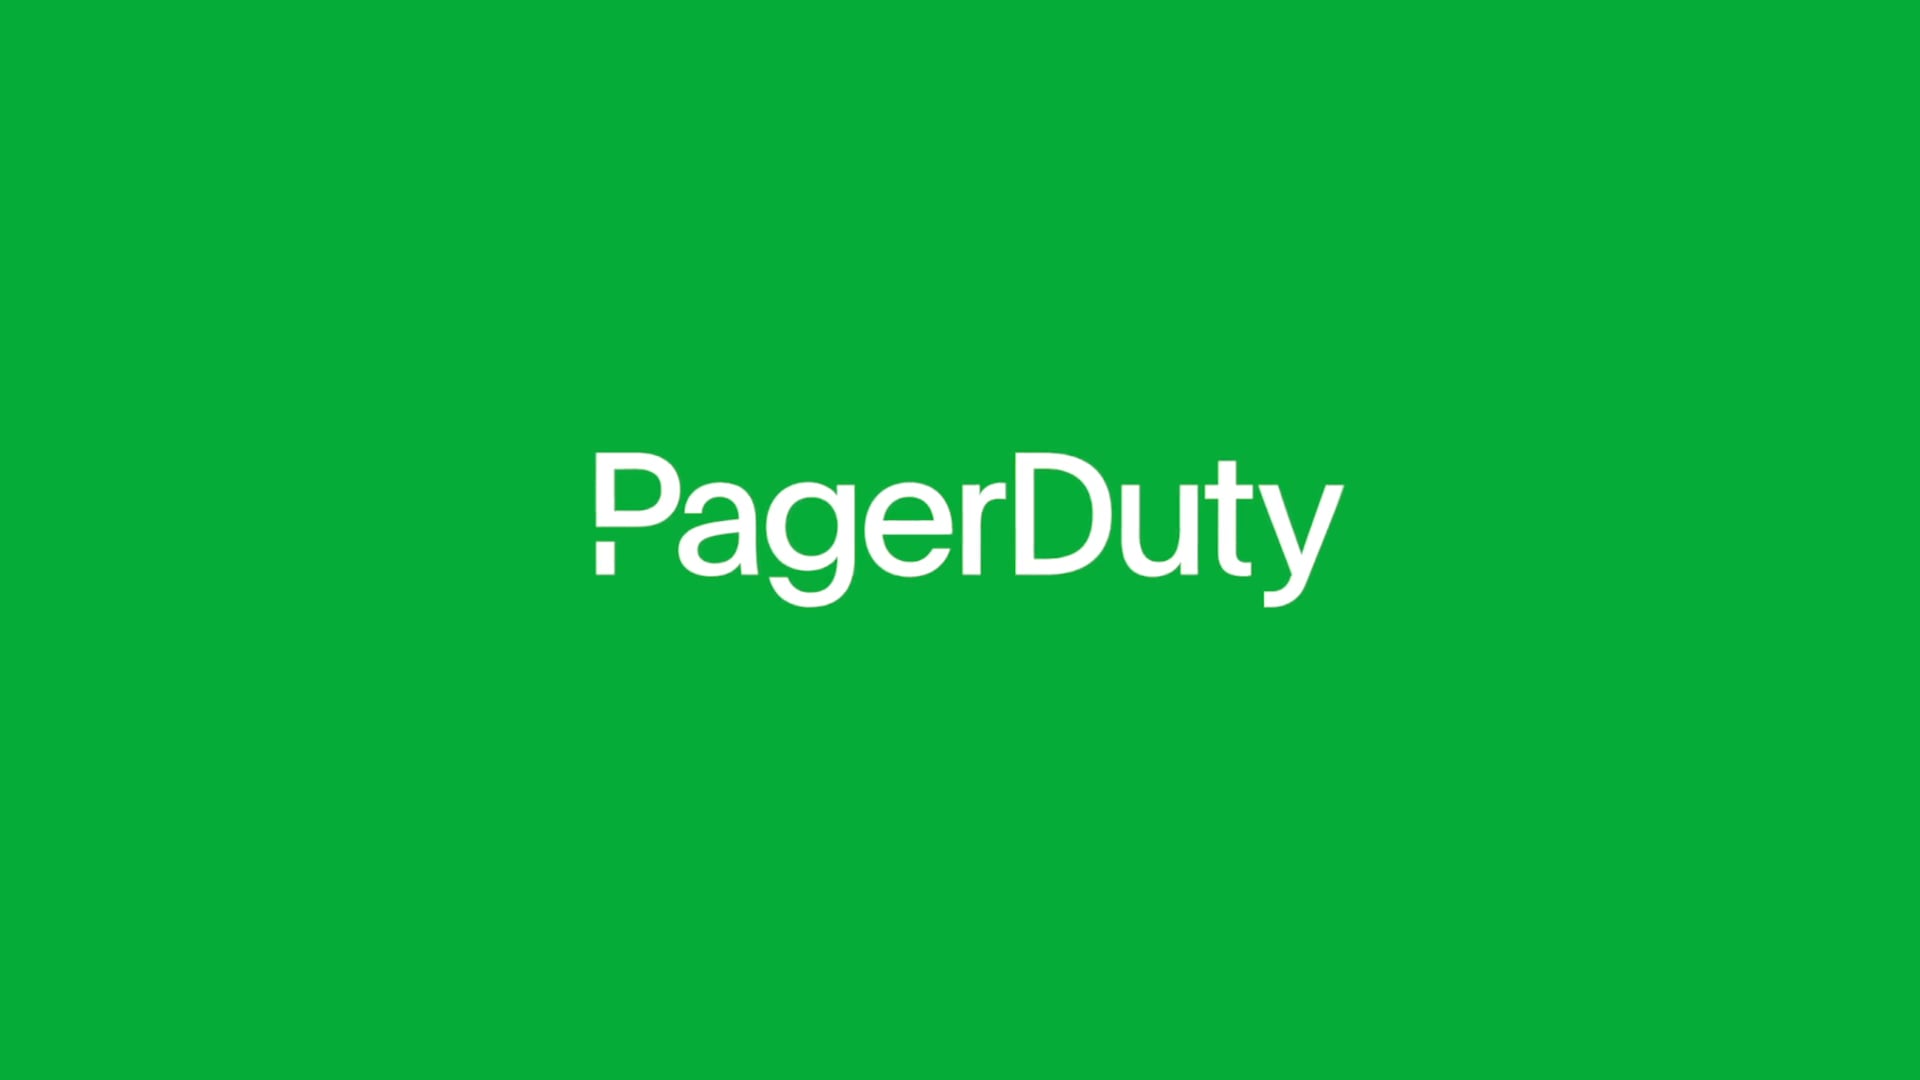 PagerDuty Customer Testimonial with Dropbox